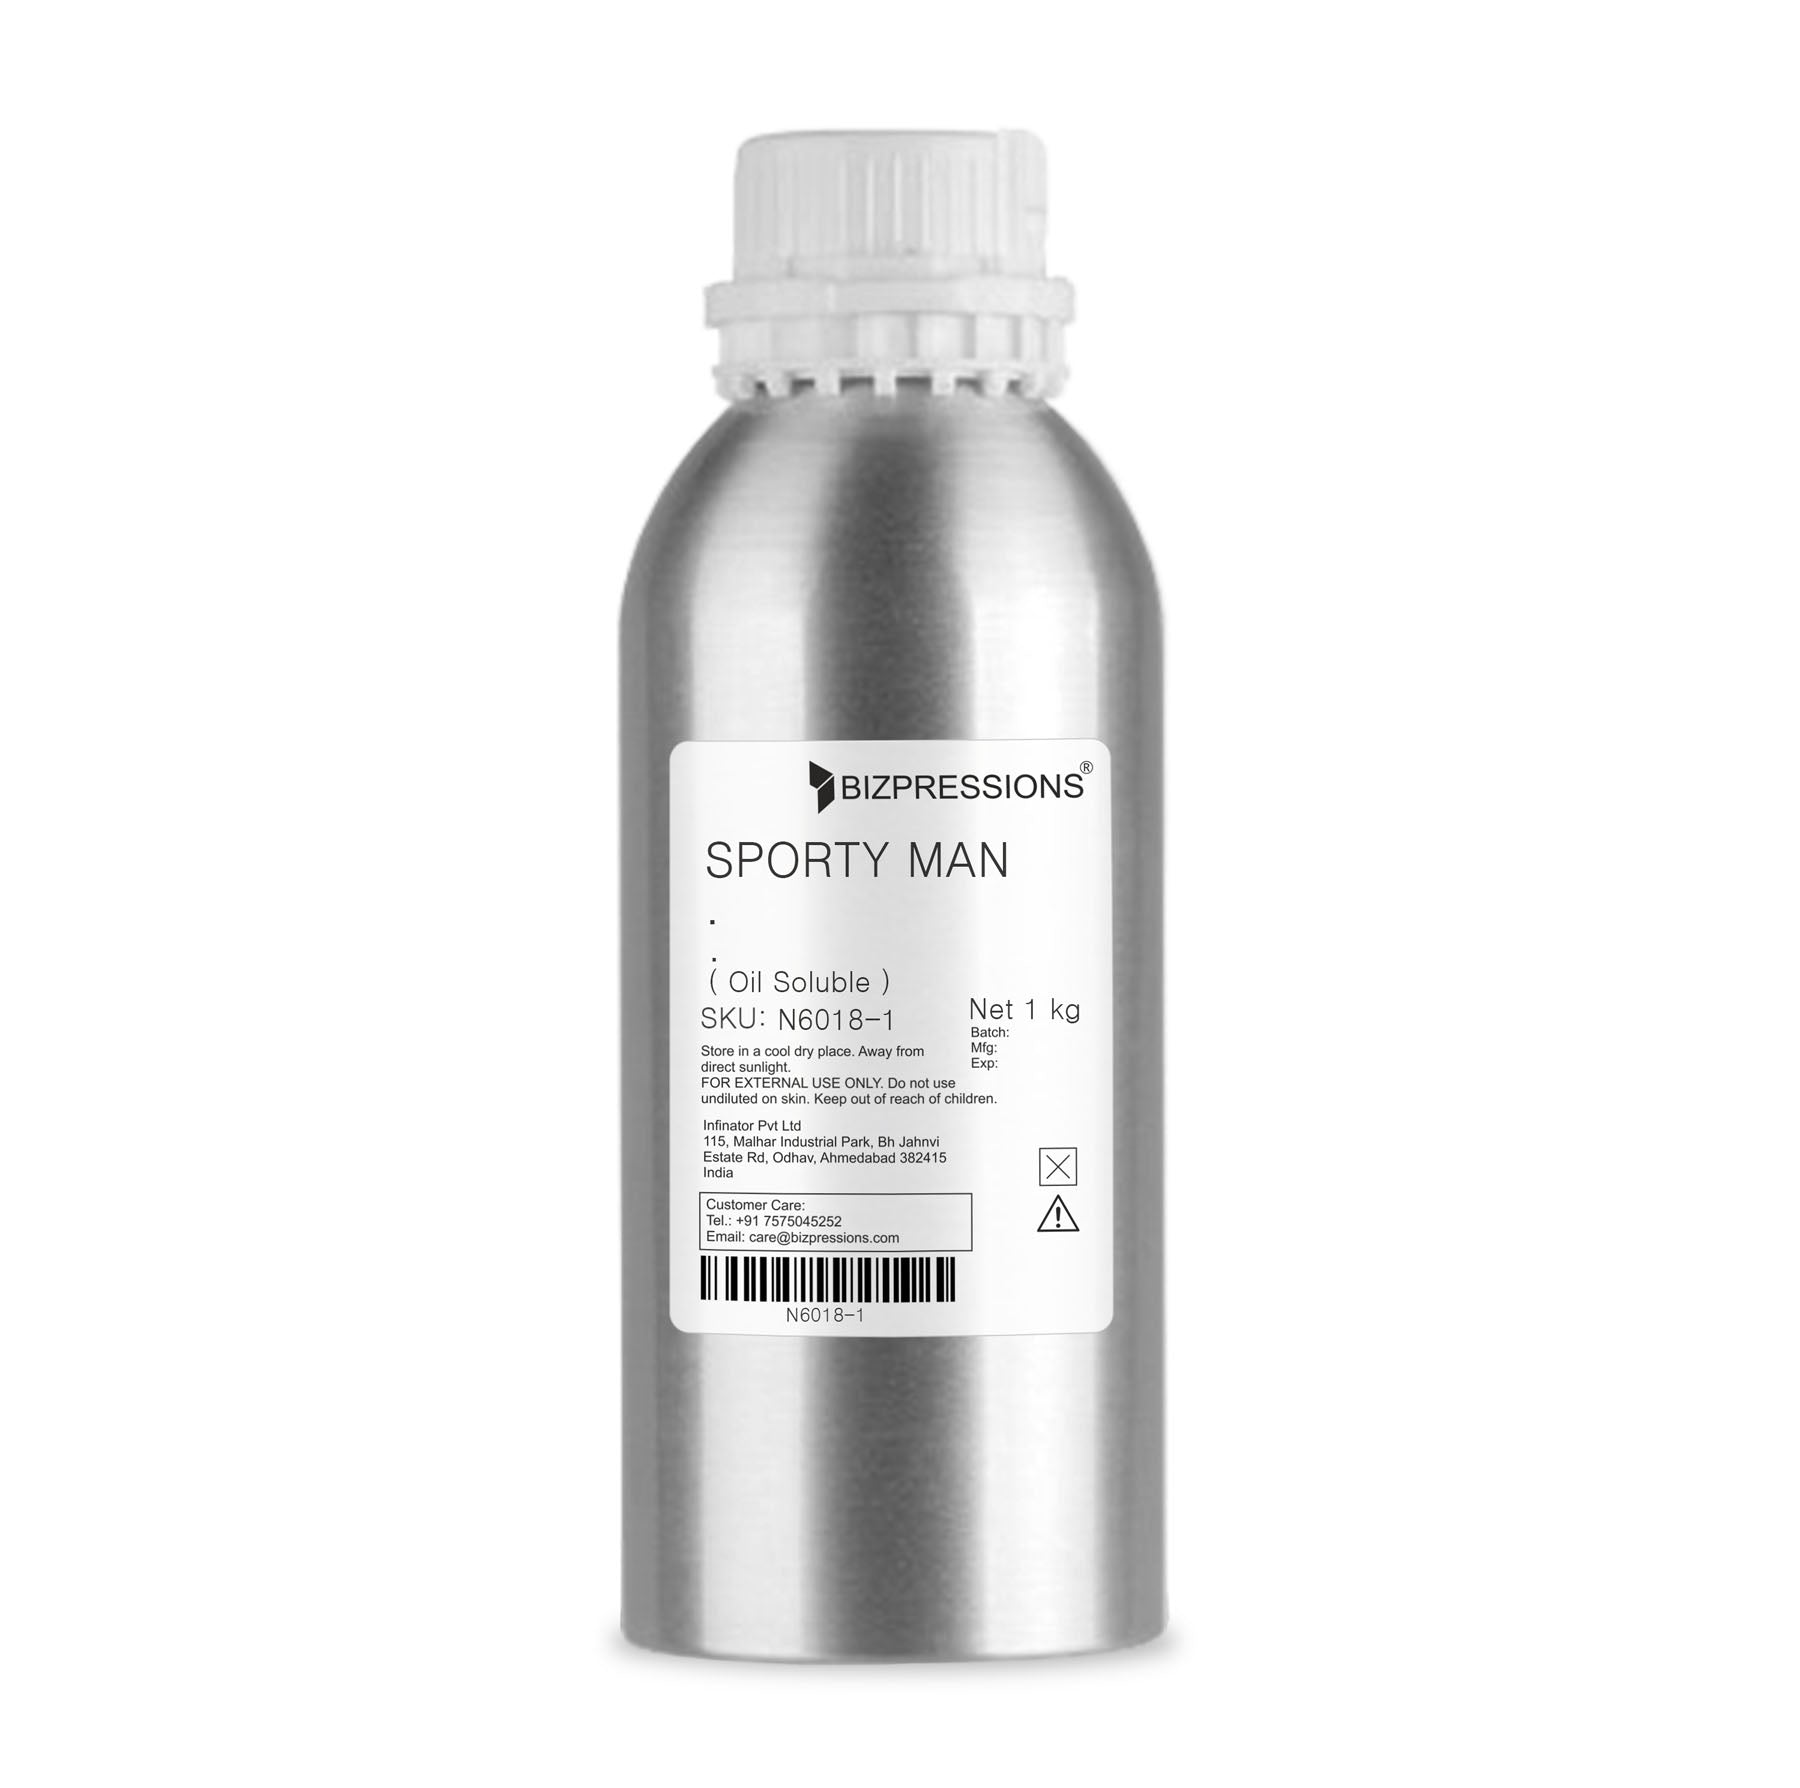 SPORTY MAN - Fragrance ( Oil Soluble ) - 1 kg